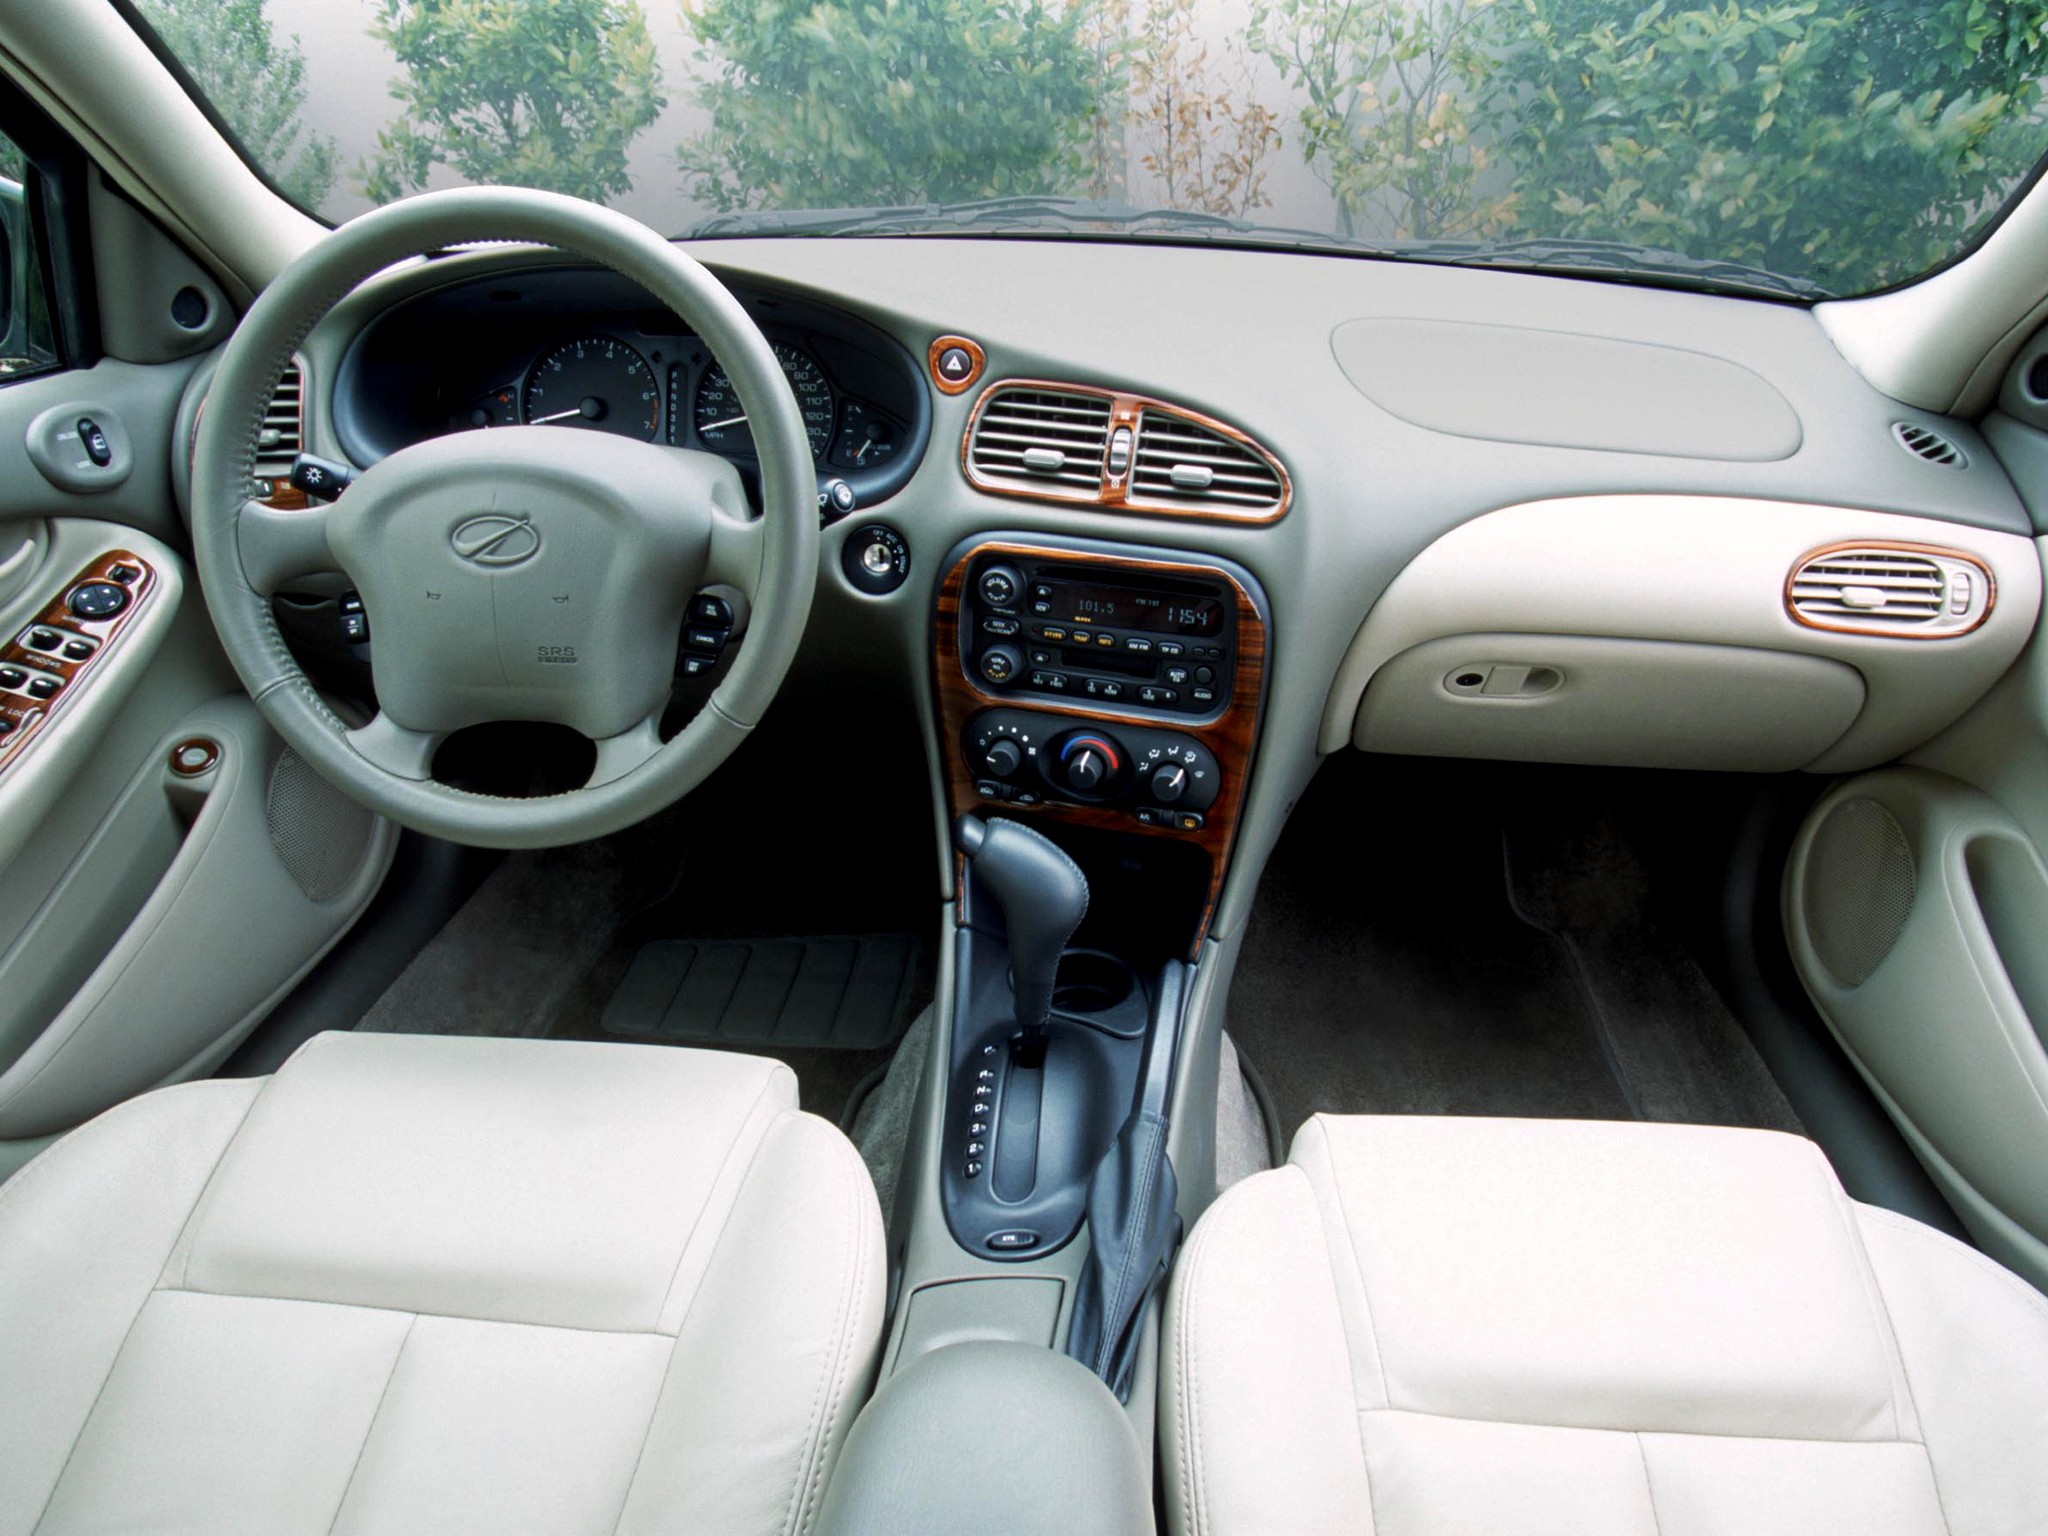 OLDSMOBILE Alero coupe 2000 car price, specs, images, installment schedule,  review | Wapcar.my